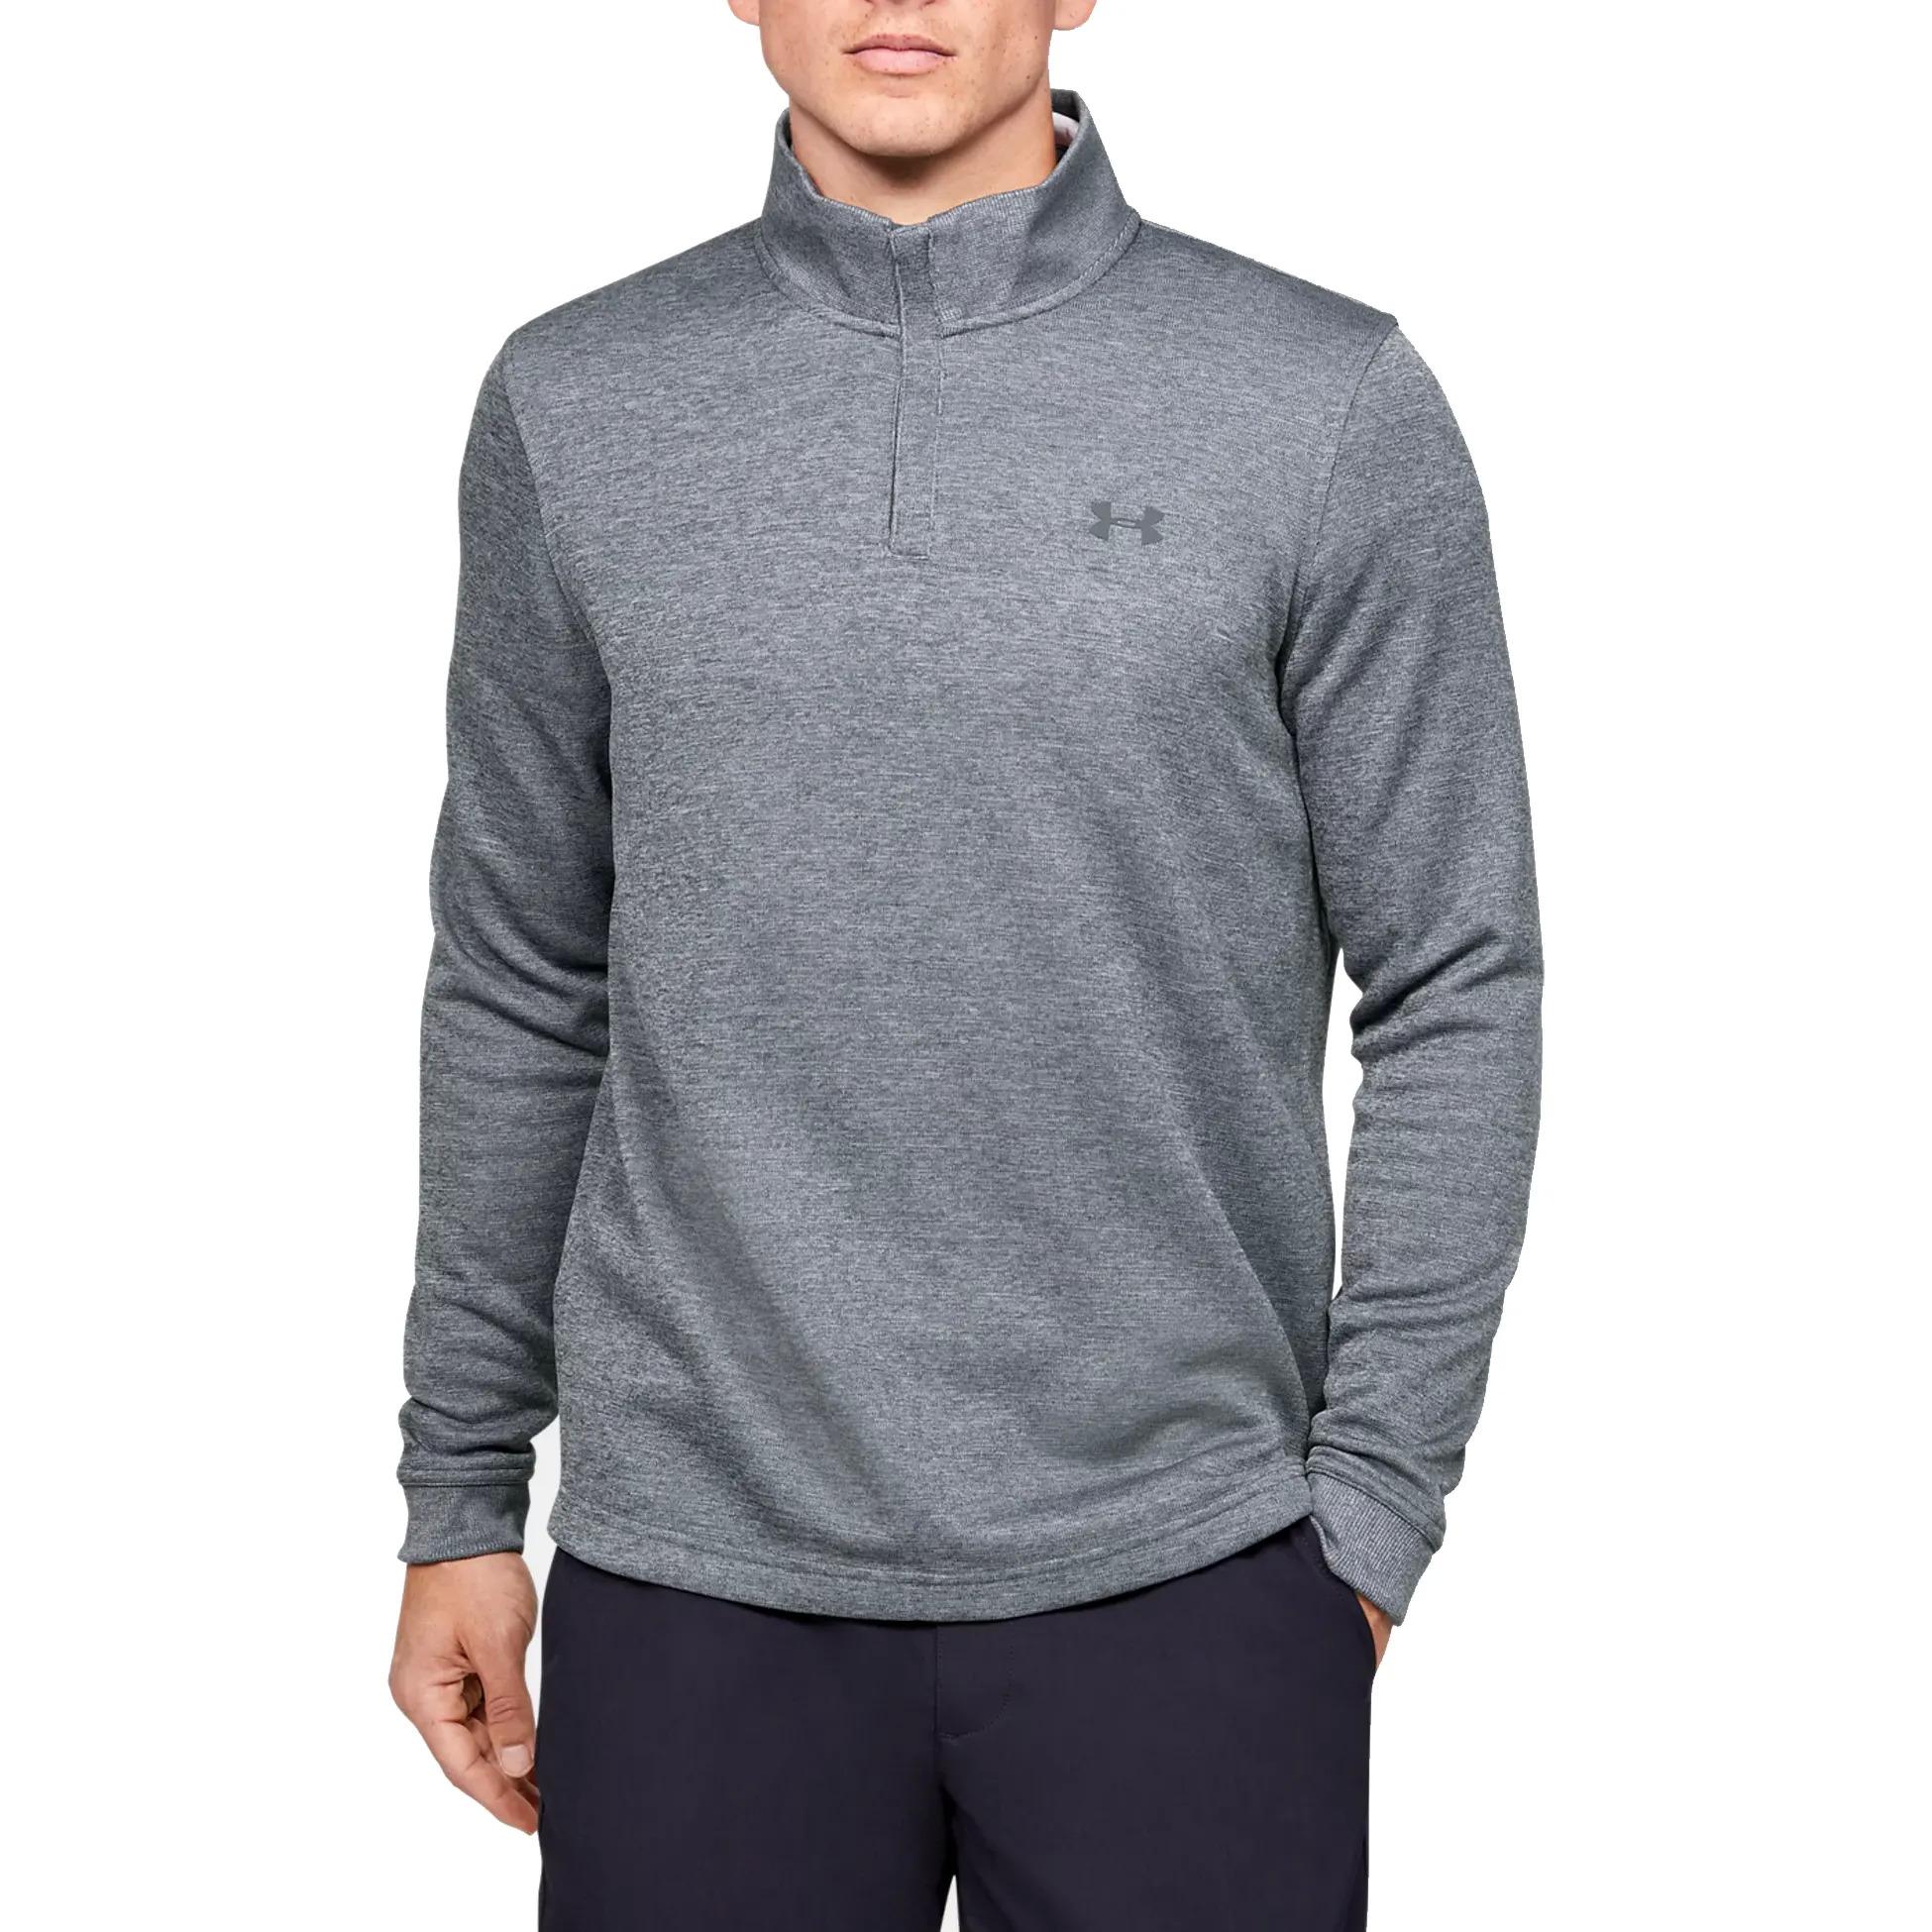 Under Armour Men's UA Storm SweaterFleece 1/4 Zip for $25 Shipped